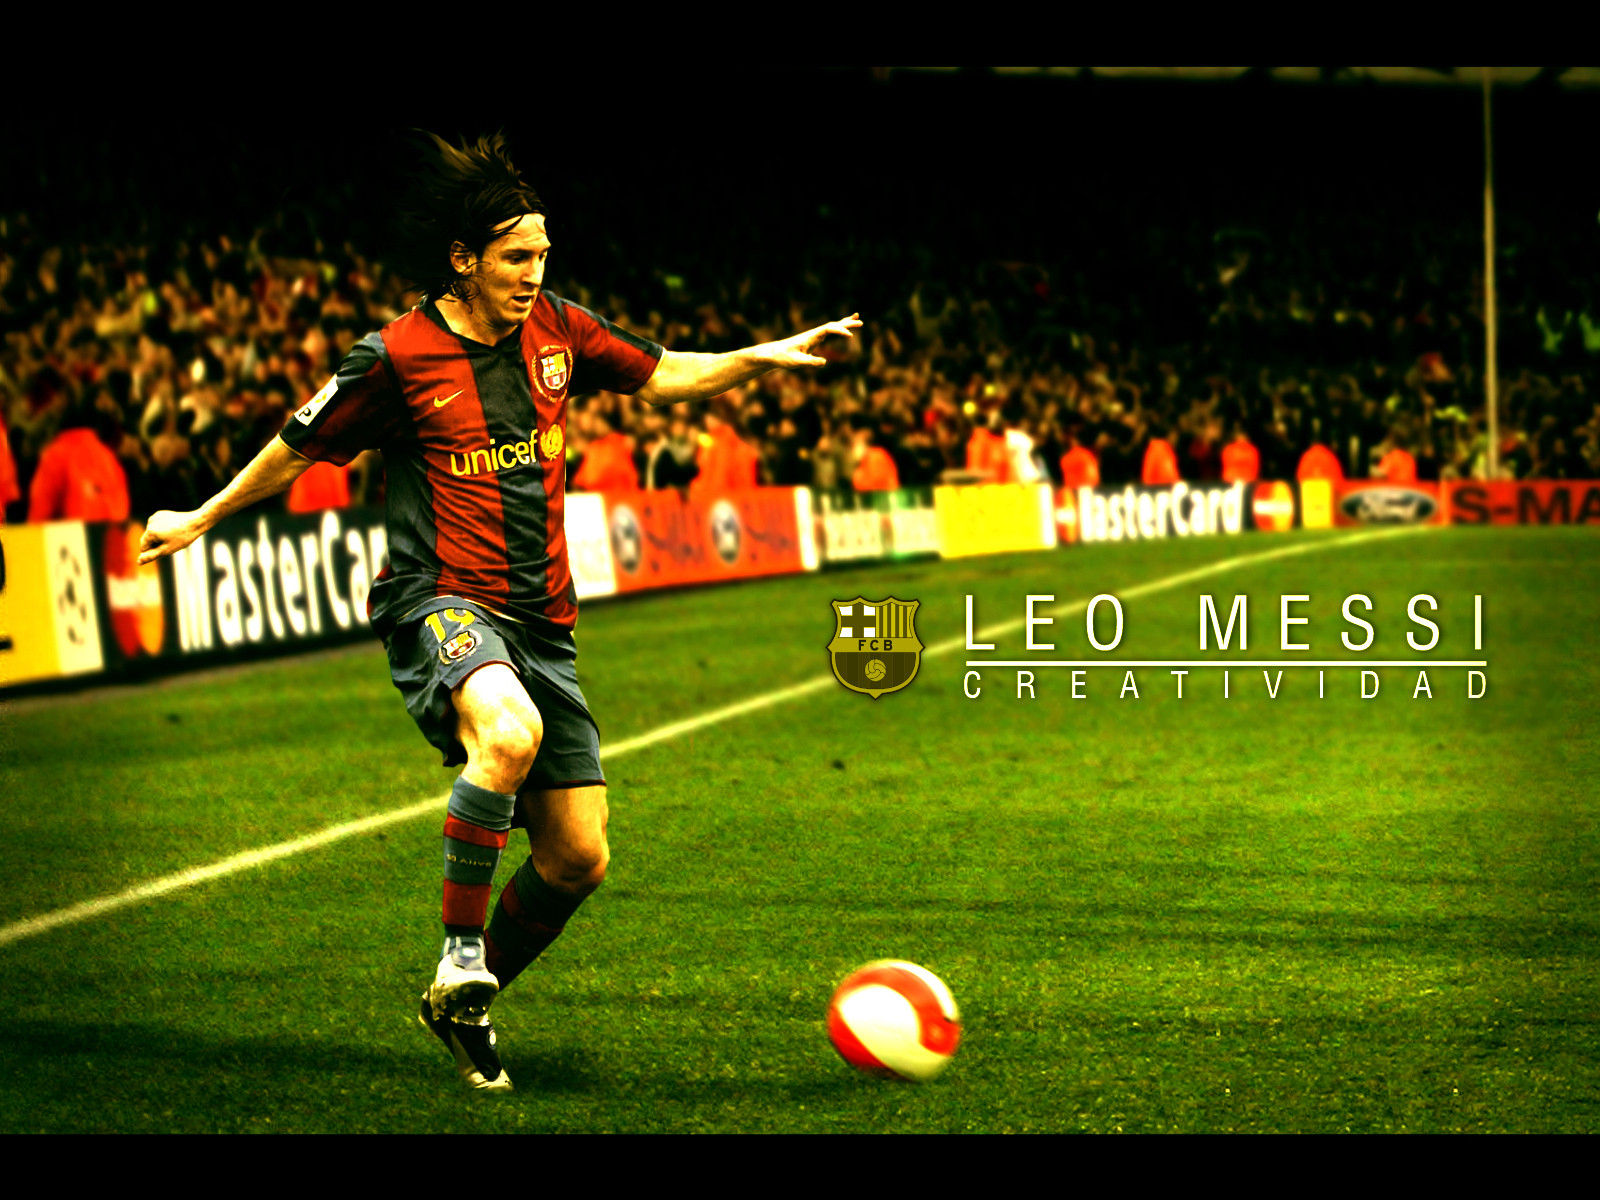 Lionel Messi Wallpaper Pictures HD Amagico